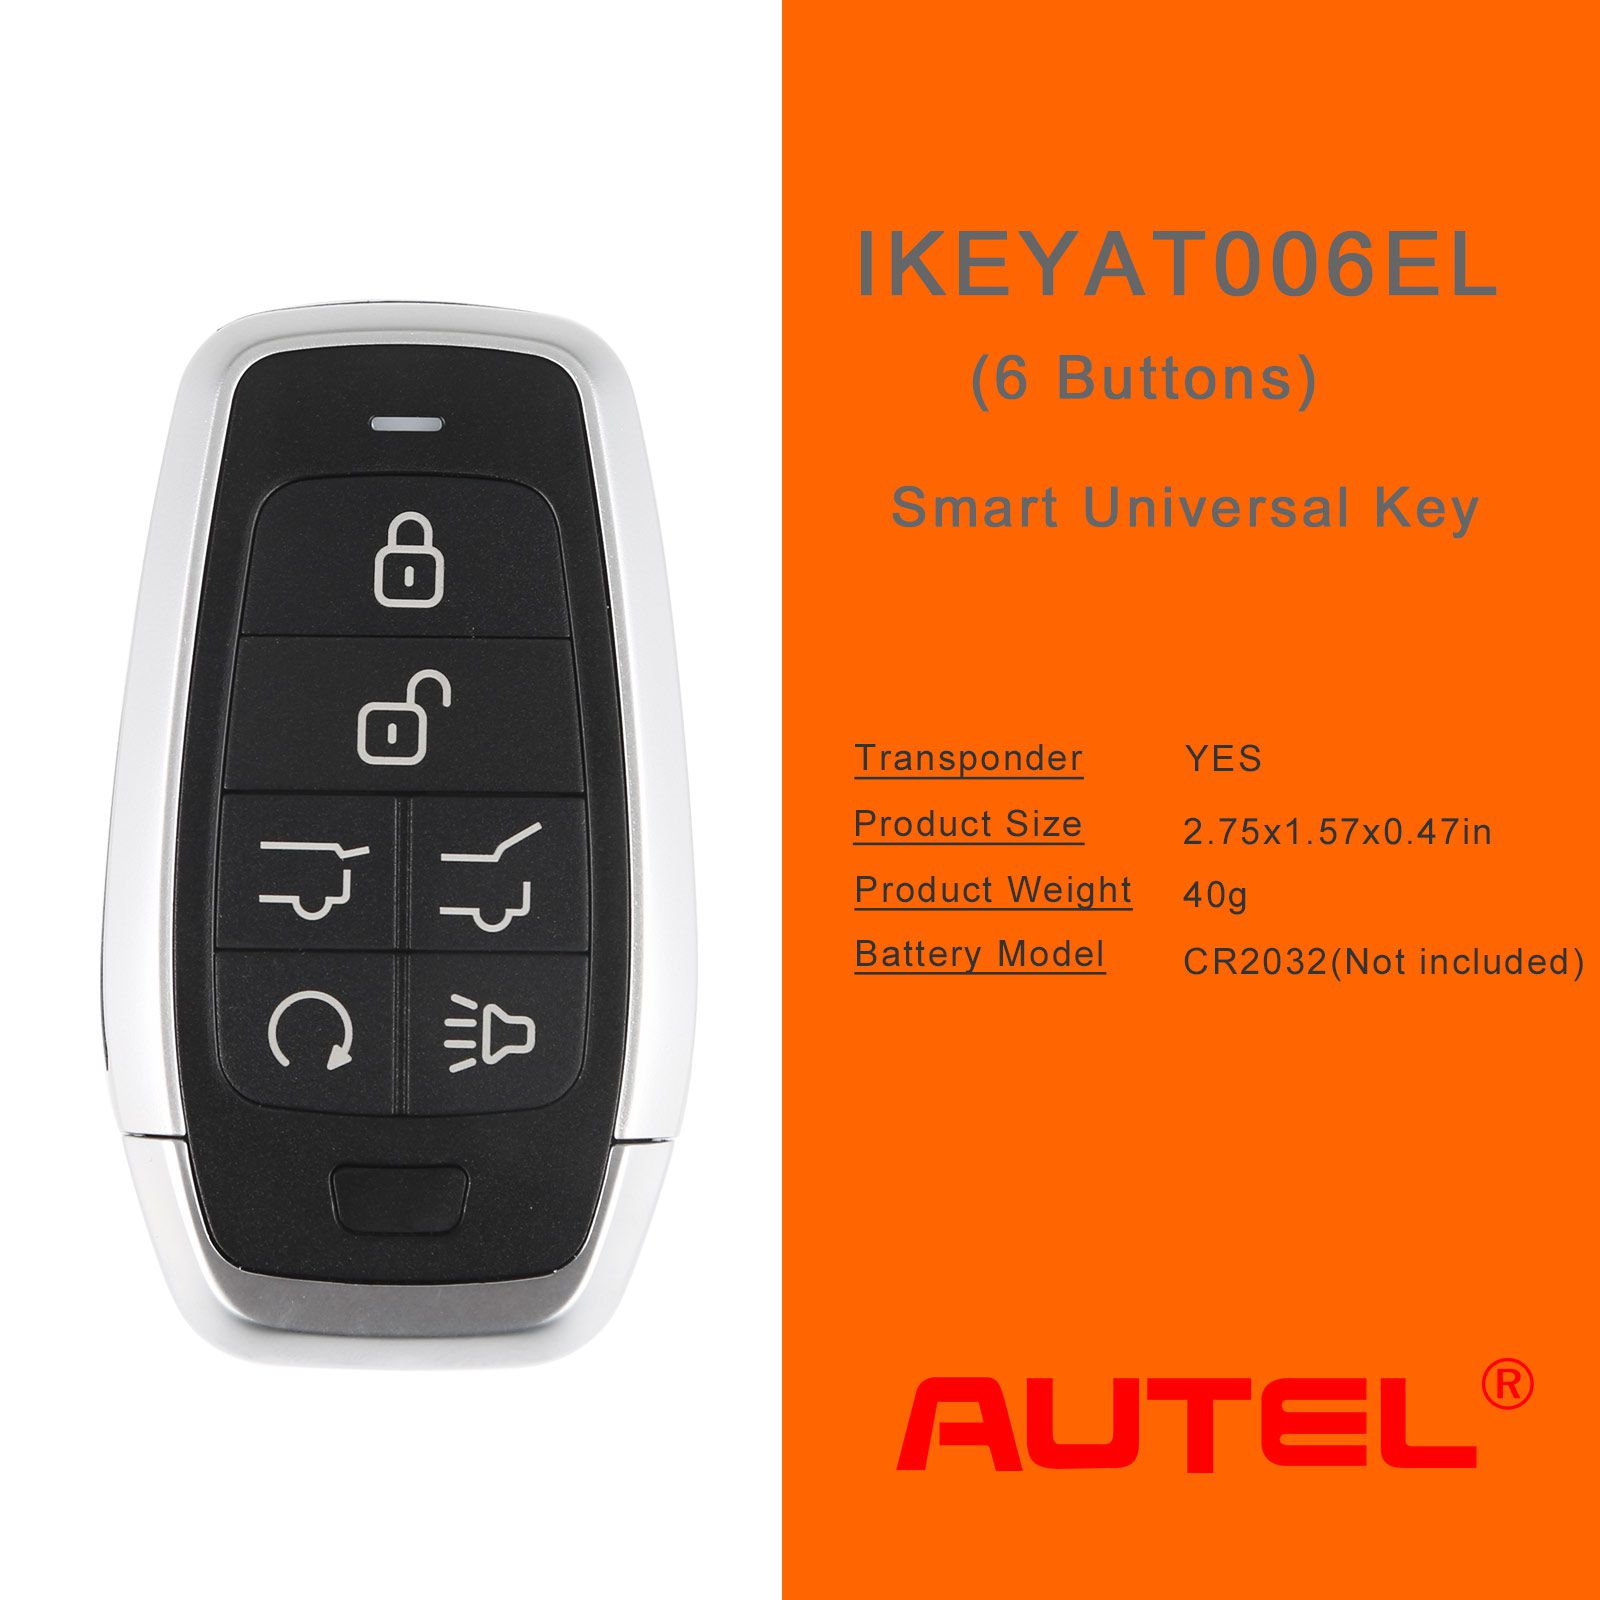 AUTEL IKEYAT006EL 6 버튼 독립형 범용 스마트키 5개/배치